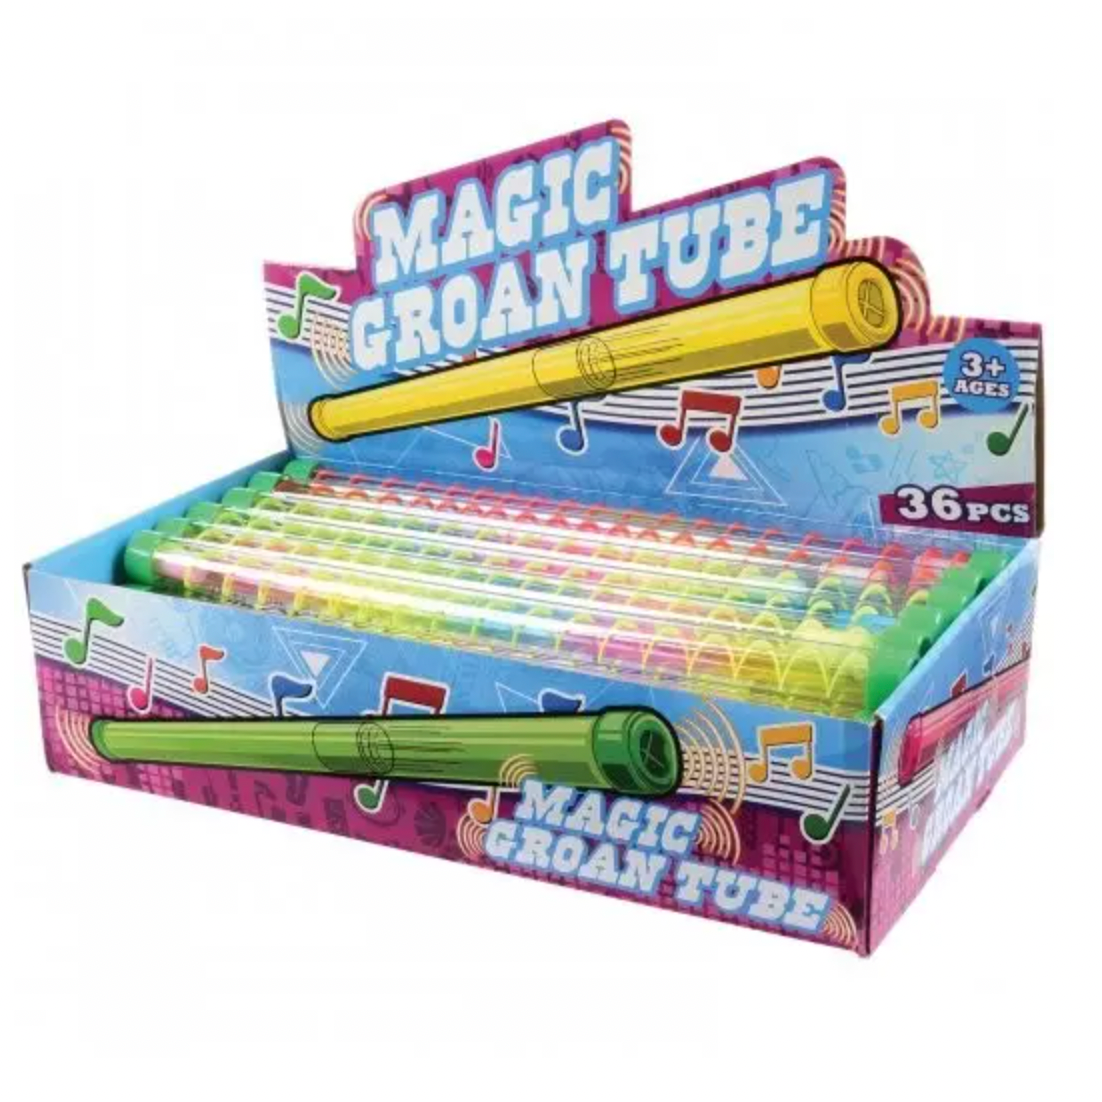 U.S. Toy Gravity Magic Groan Tubes